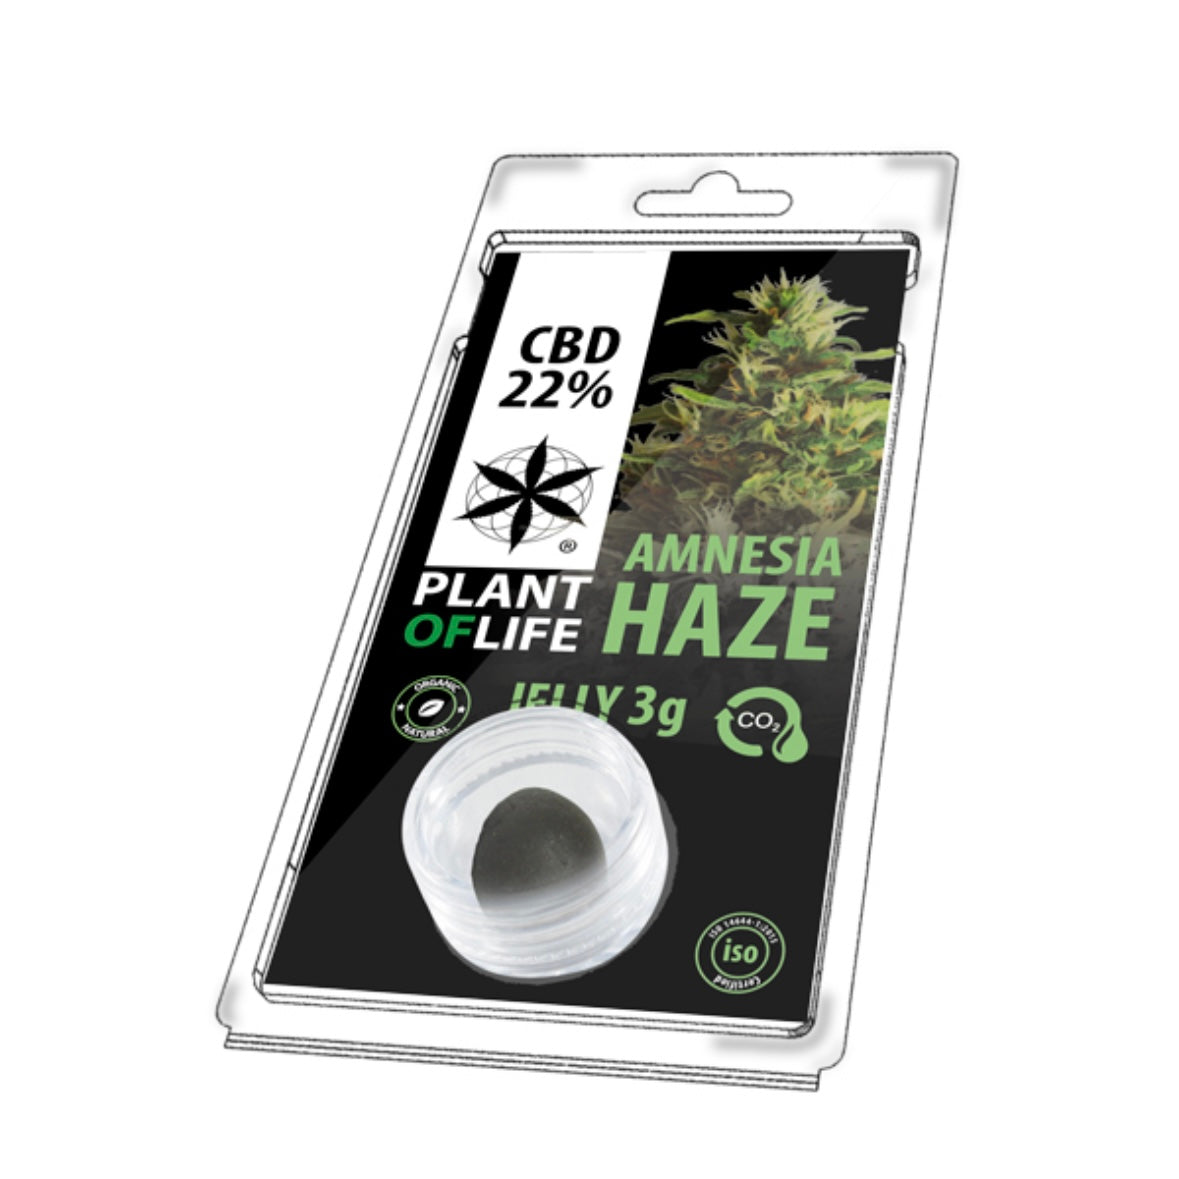 Plant of Life 22% CBD Jelly Amnesia Haze estratto - 3g